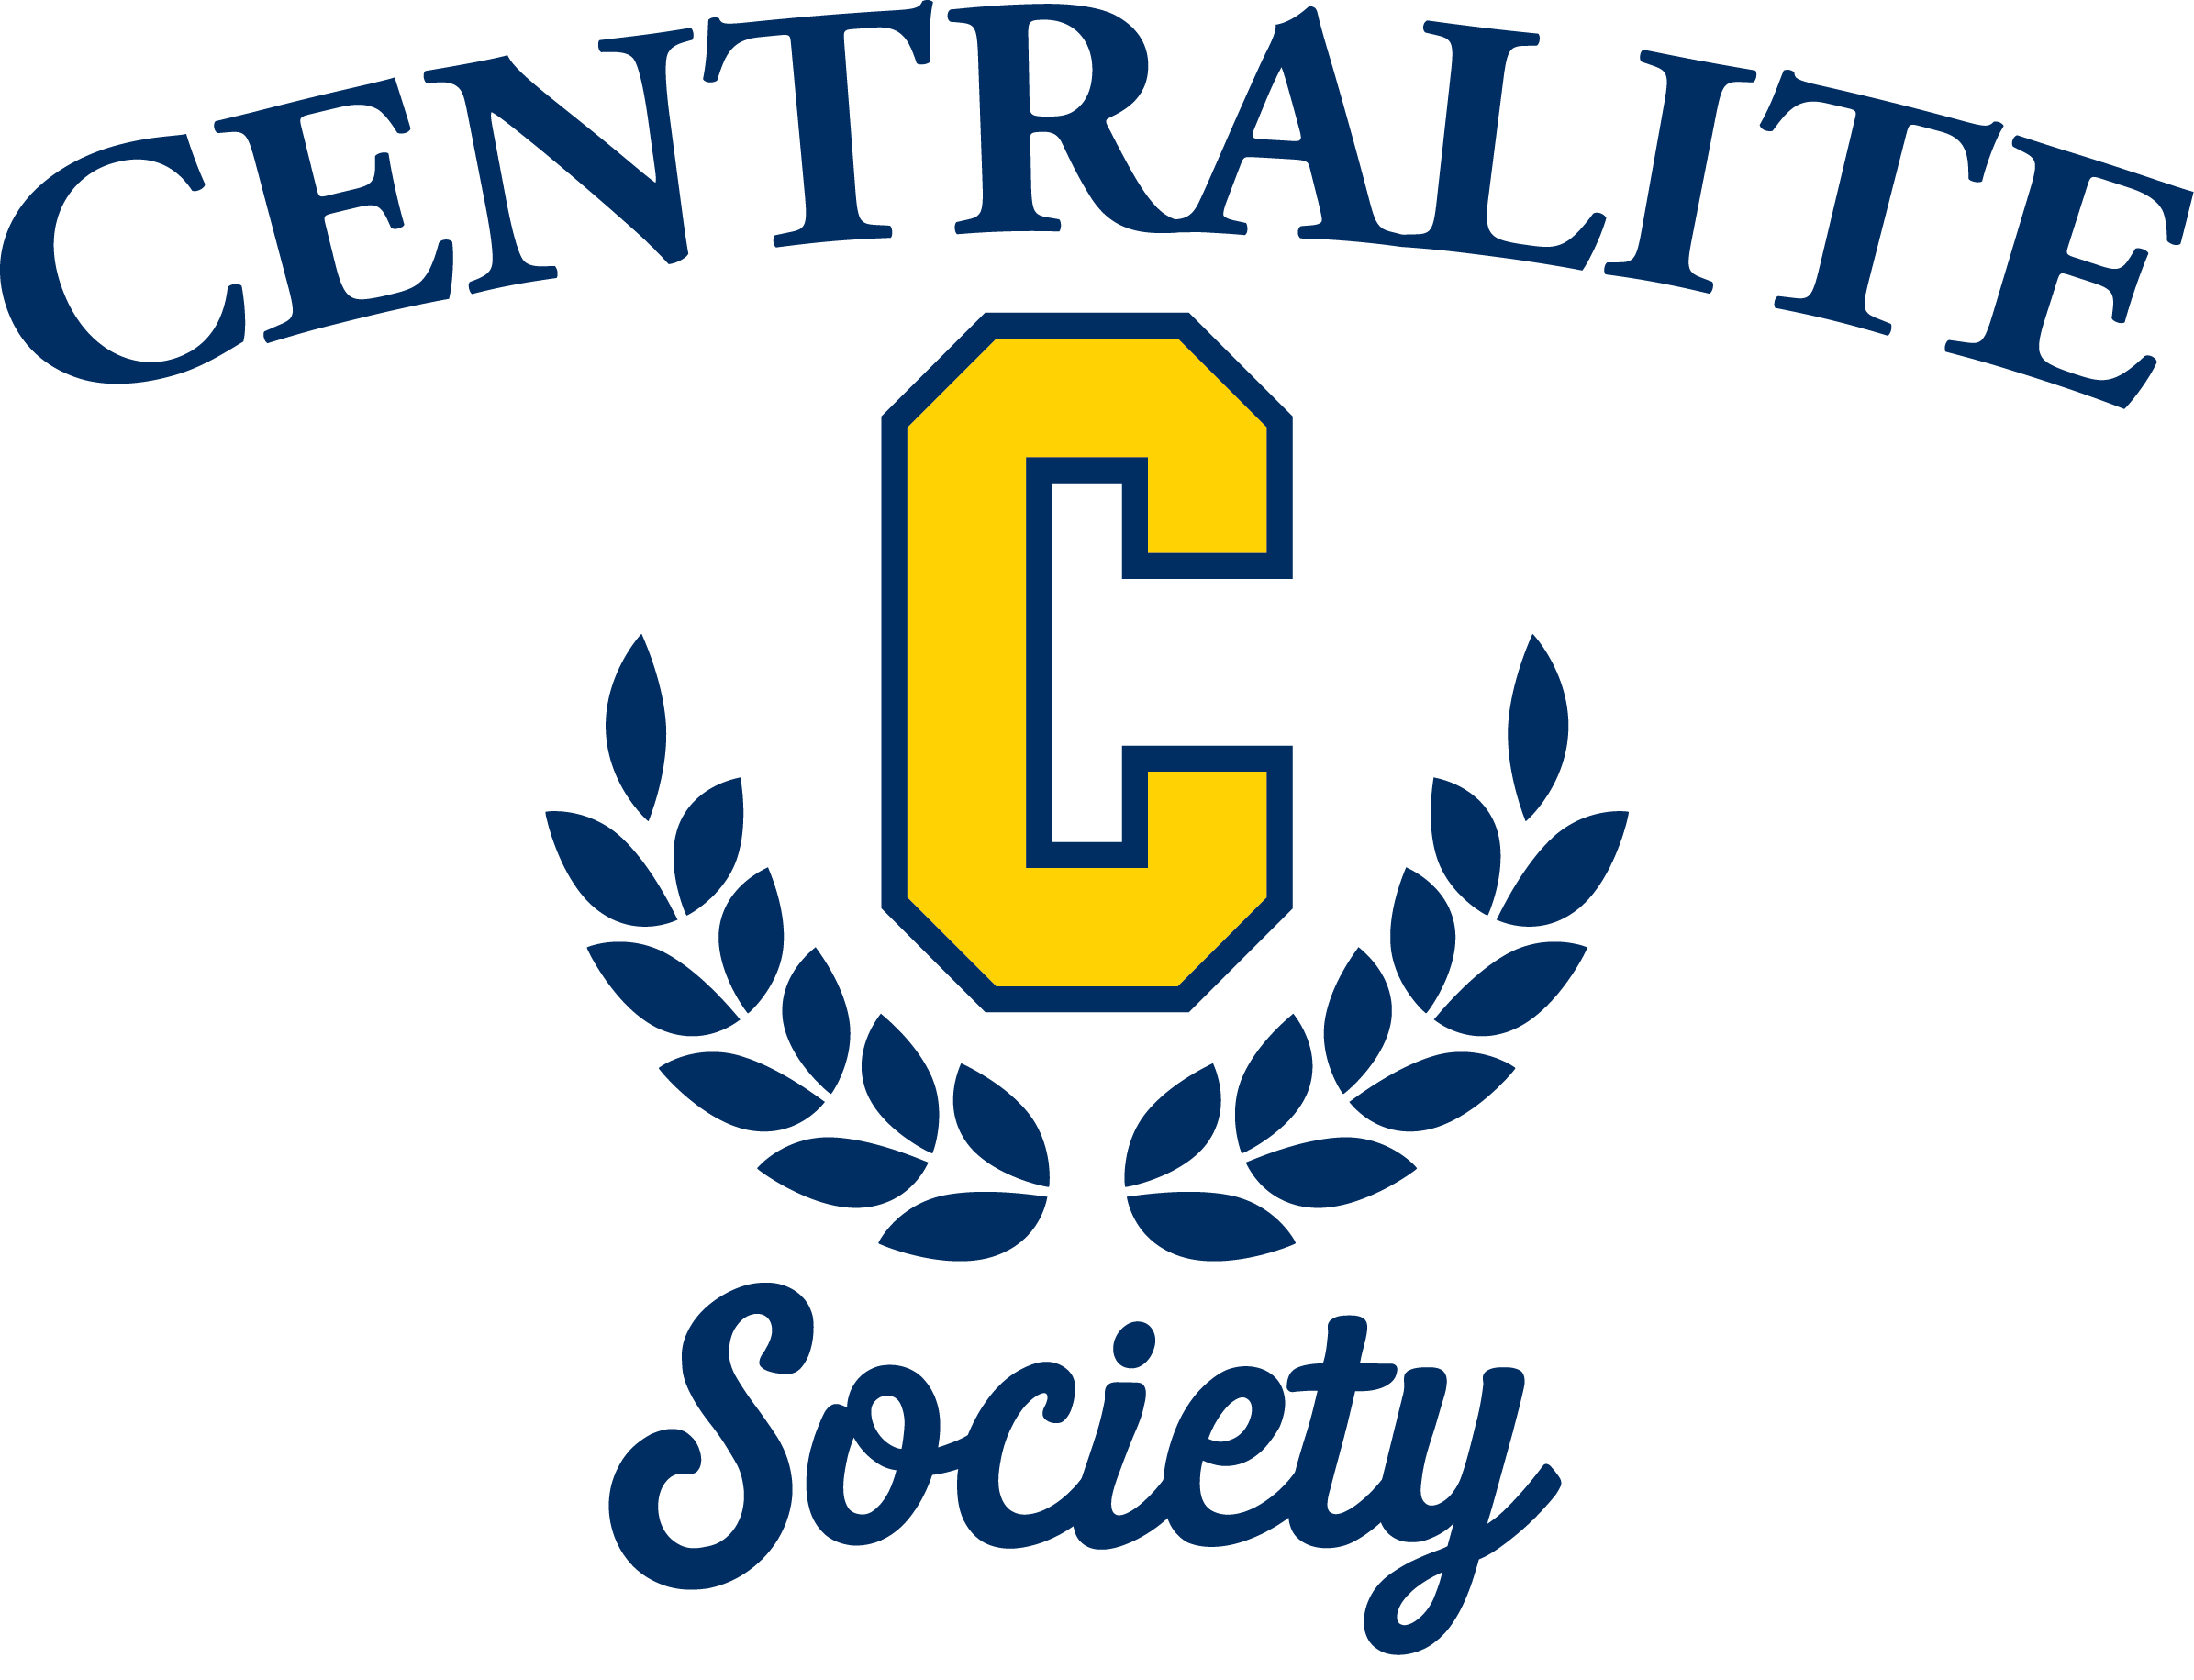 Centralite Society logo